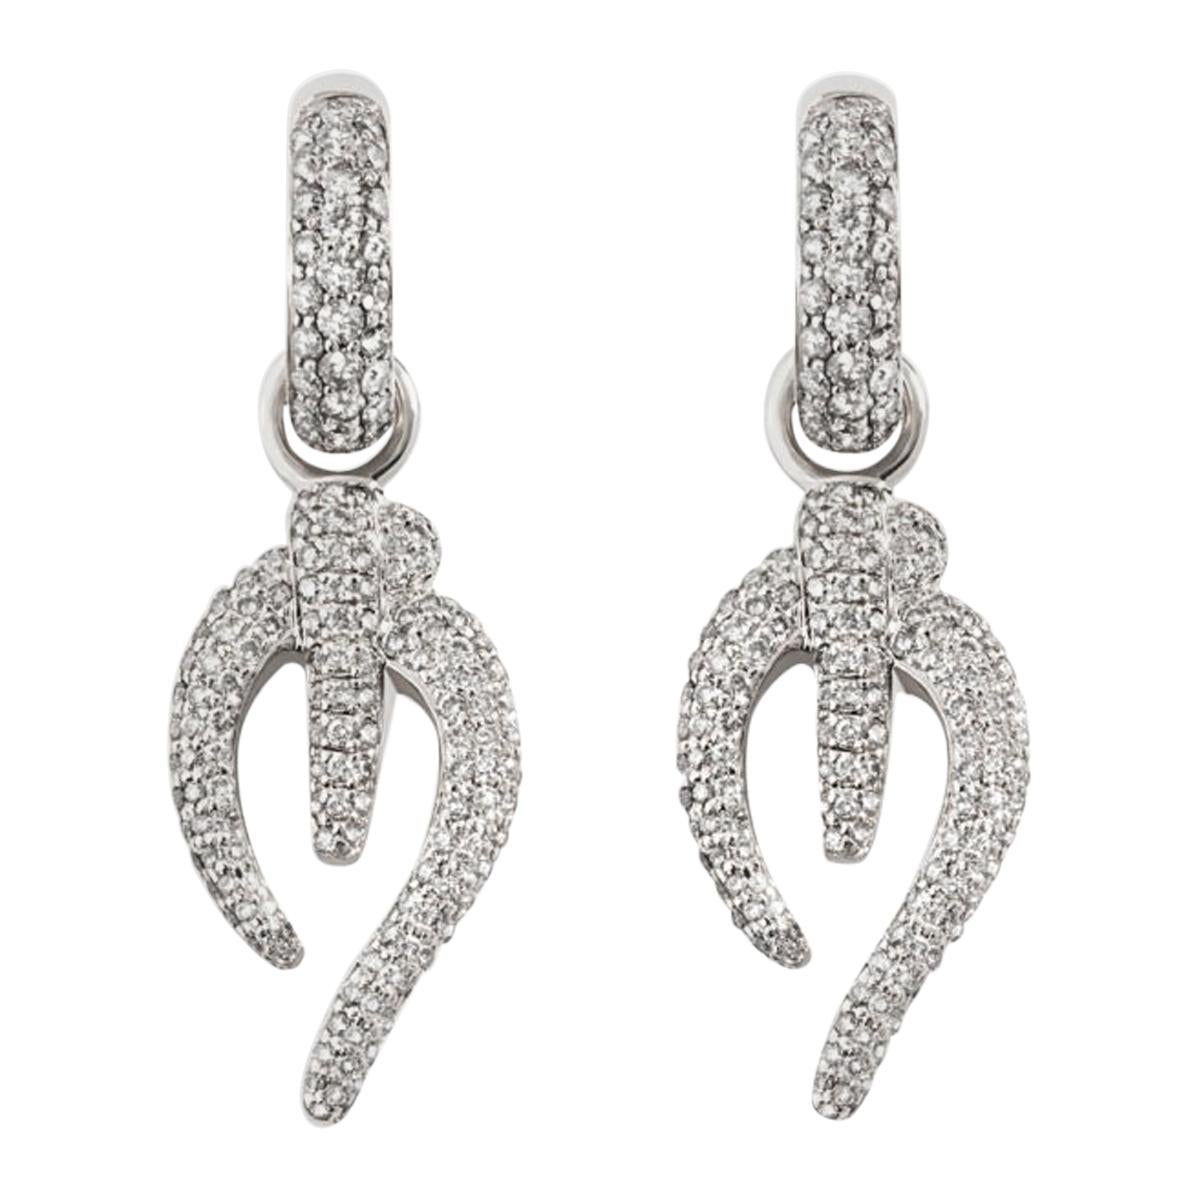 Rosenblat Earrings in 18 Karat White Gold with Diamonds of 2.12 Carat For Sale